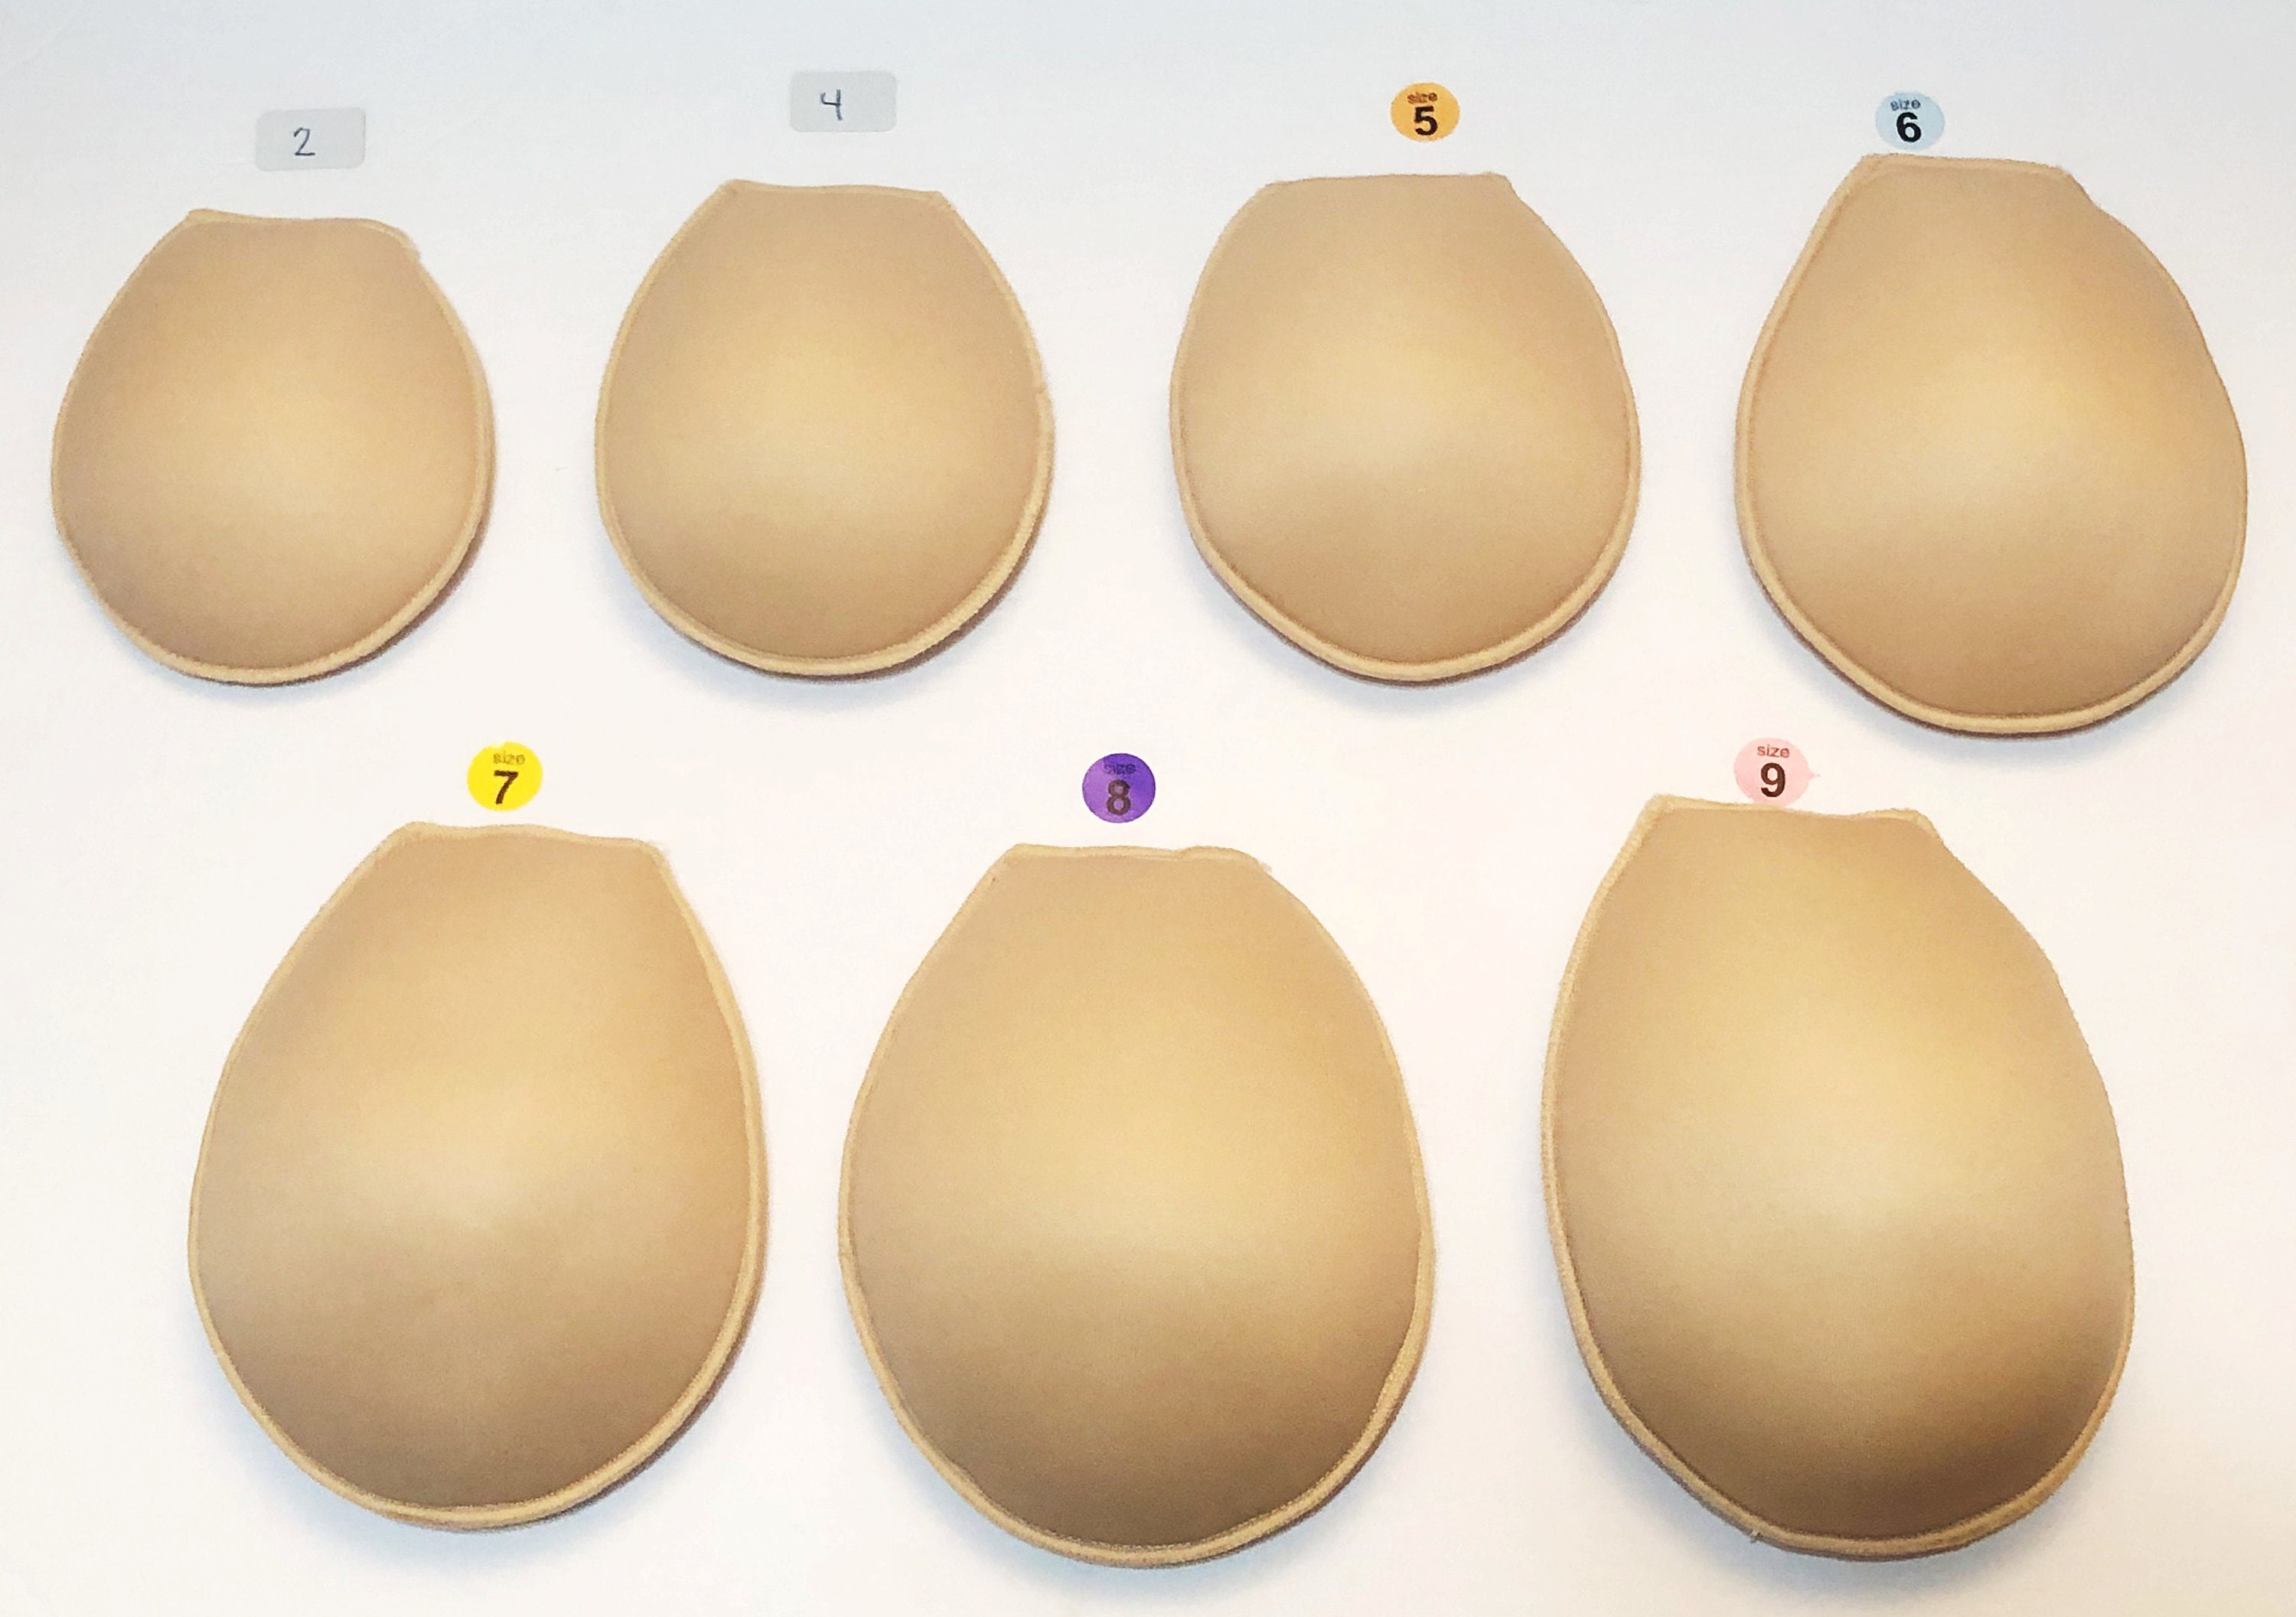 Women Breast Forms 